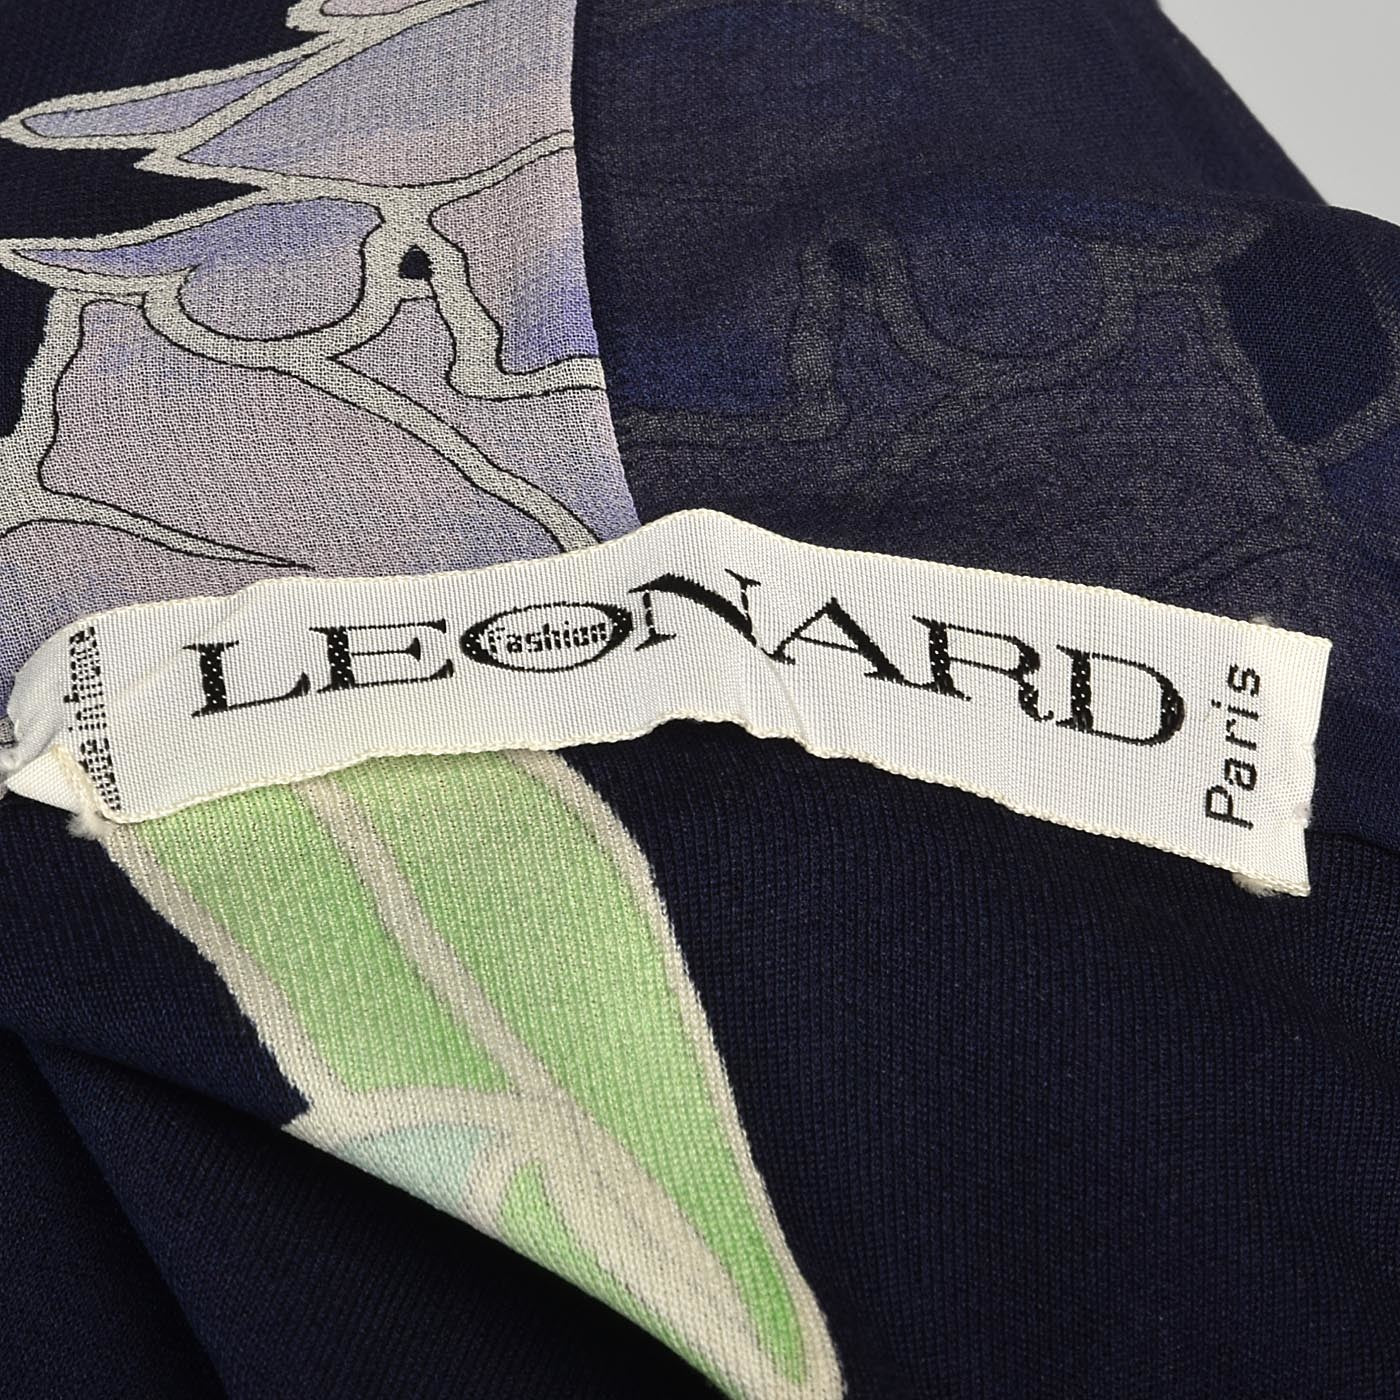 Leonard Paris Silk Jersey Evening Gown with Chiffon Poet Sleeves